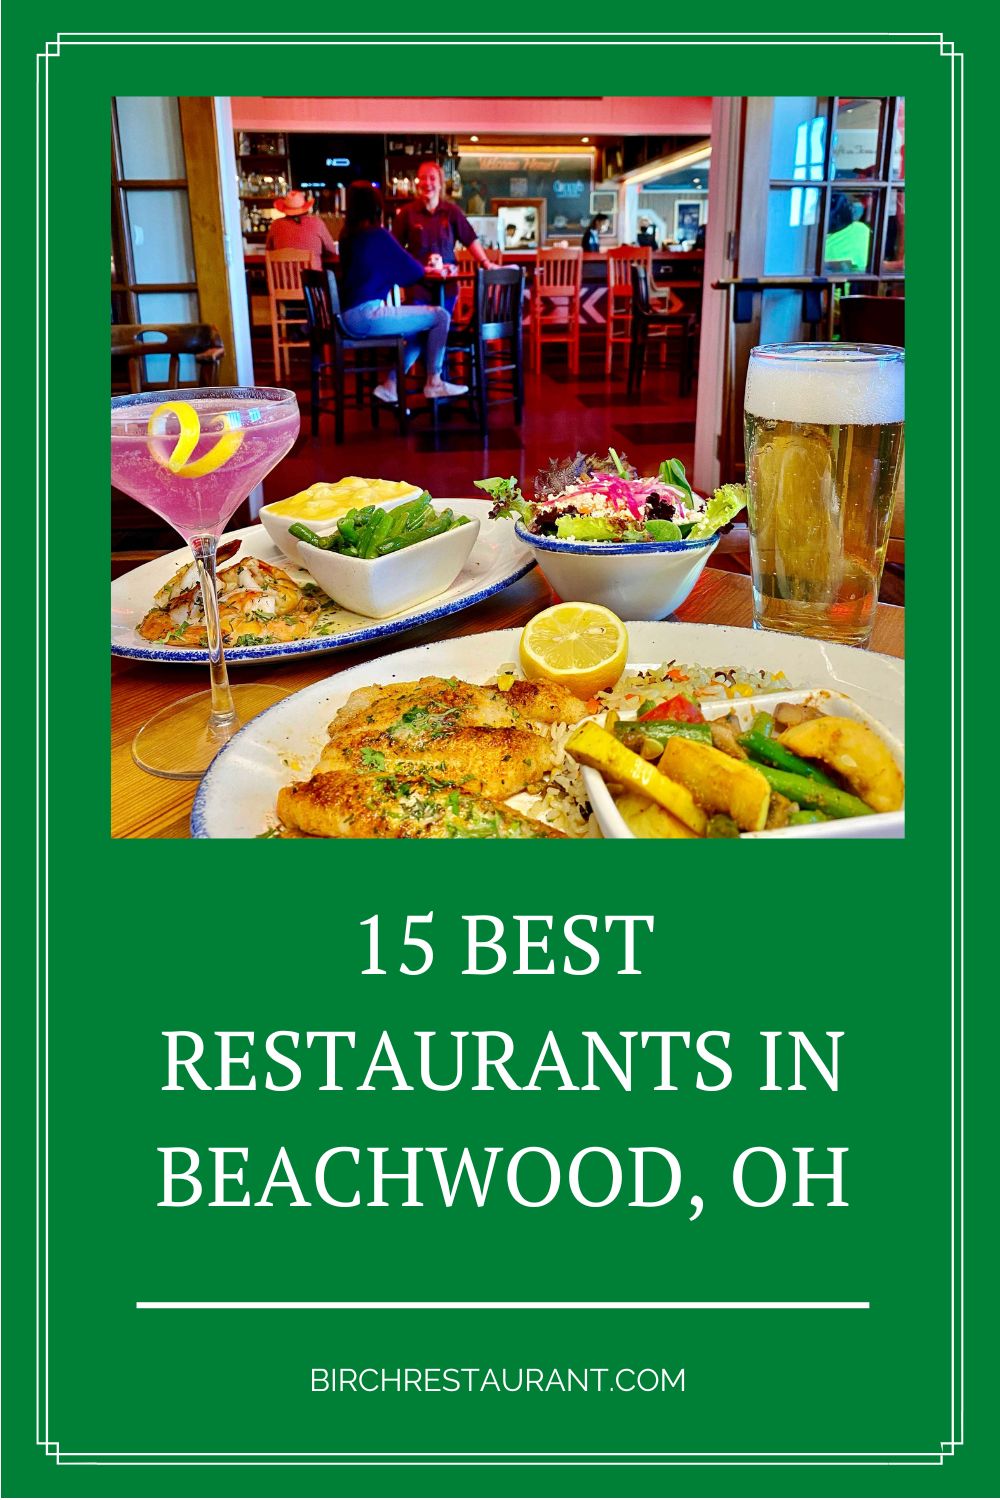 Best Restaurants in Beachwood